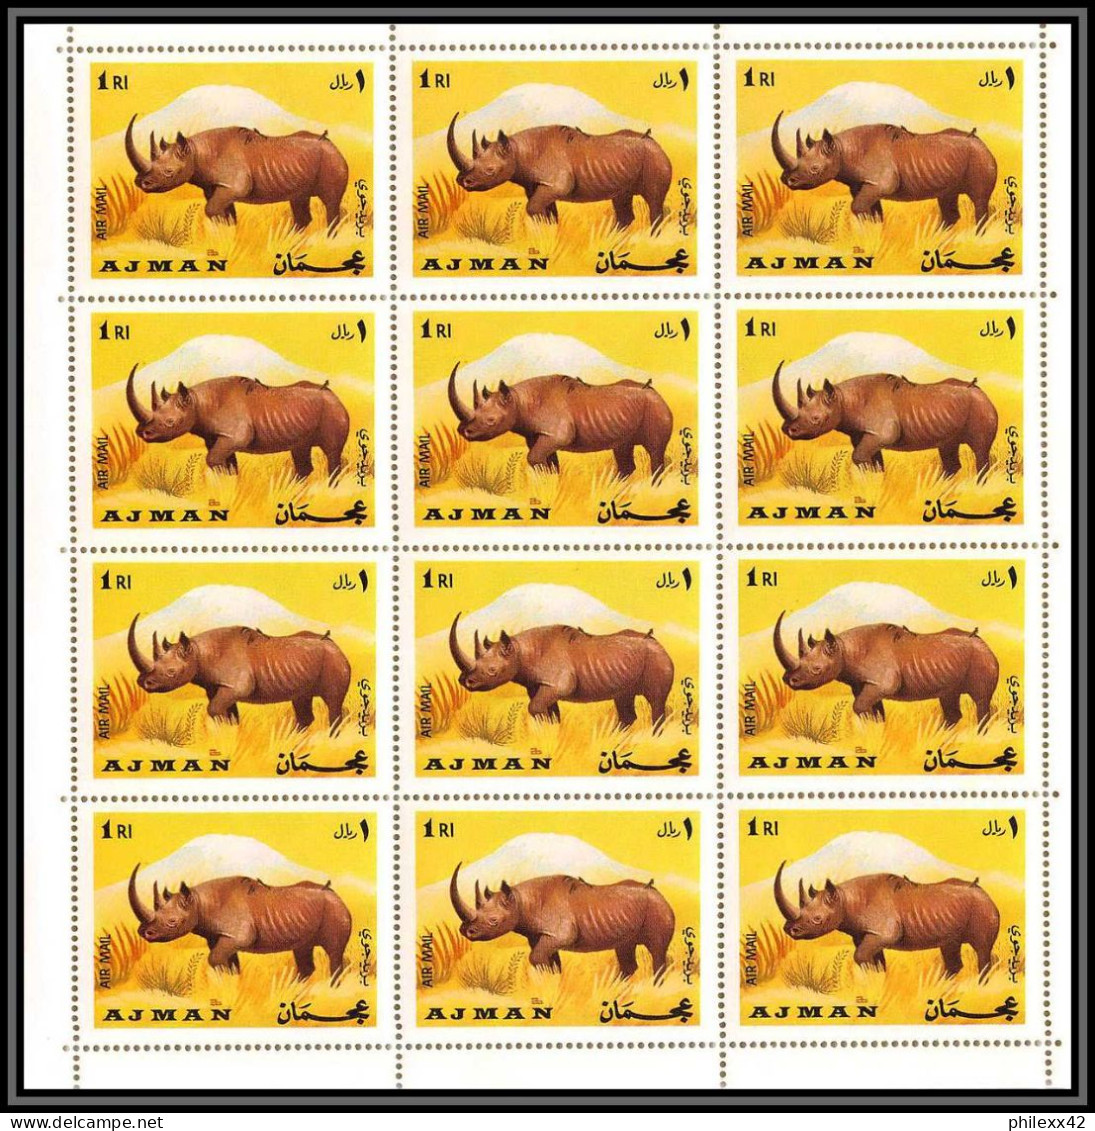 Ajman - 2998/ N°412/417 A mammals zebra zebre lion elephant ours bear rhinoceros dromedary neuf ** MNH feuille sheets